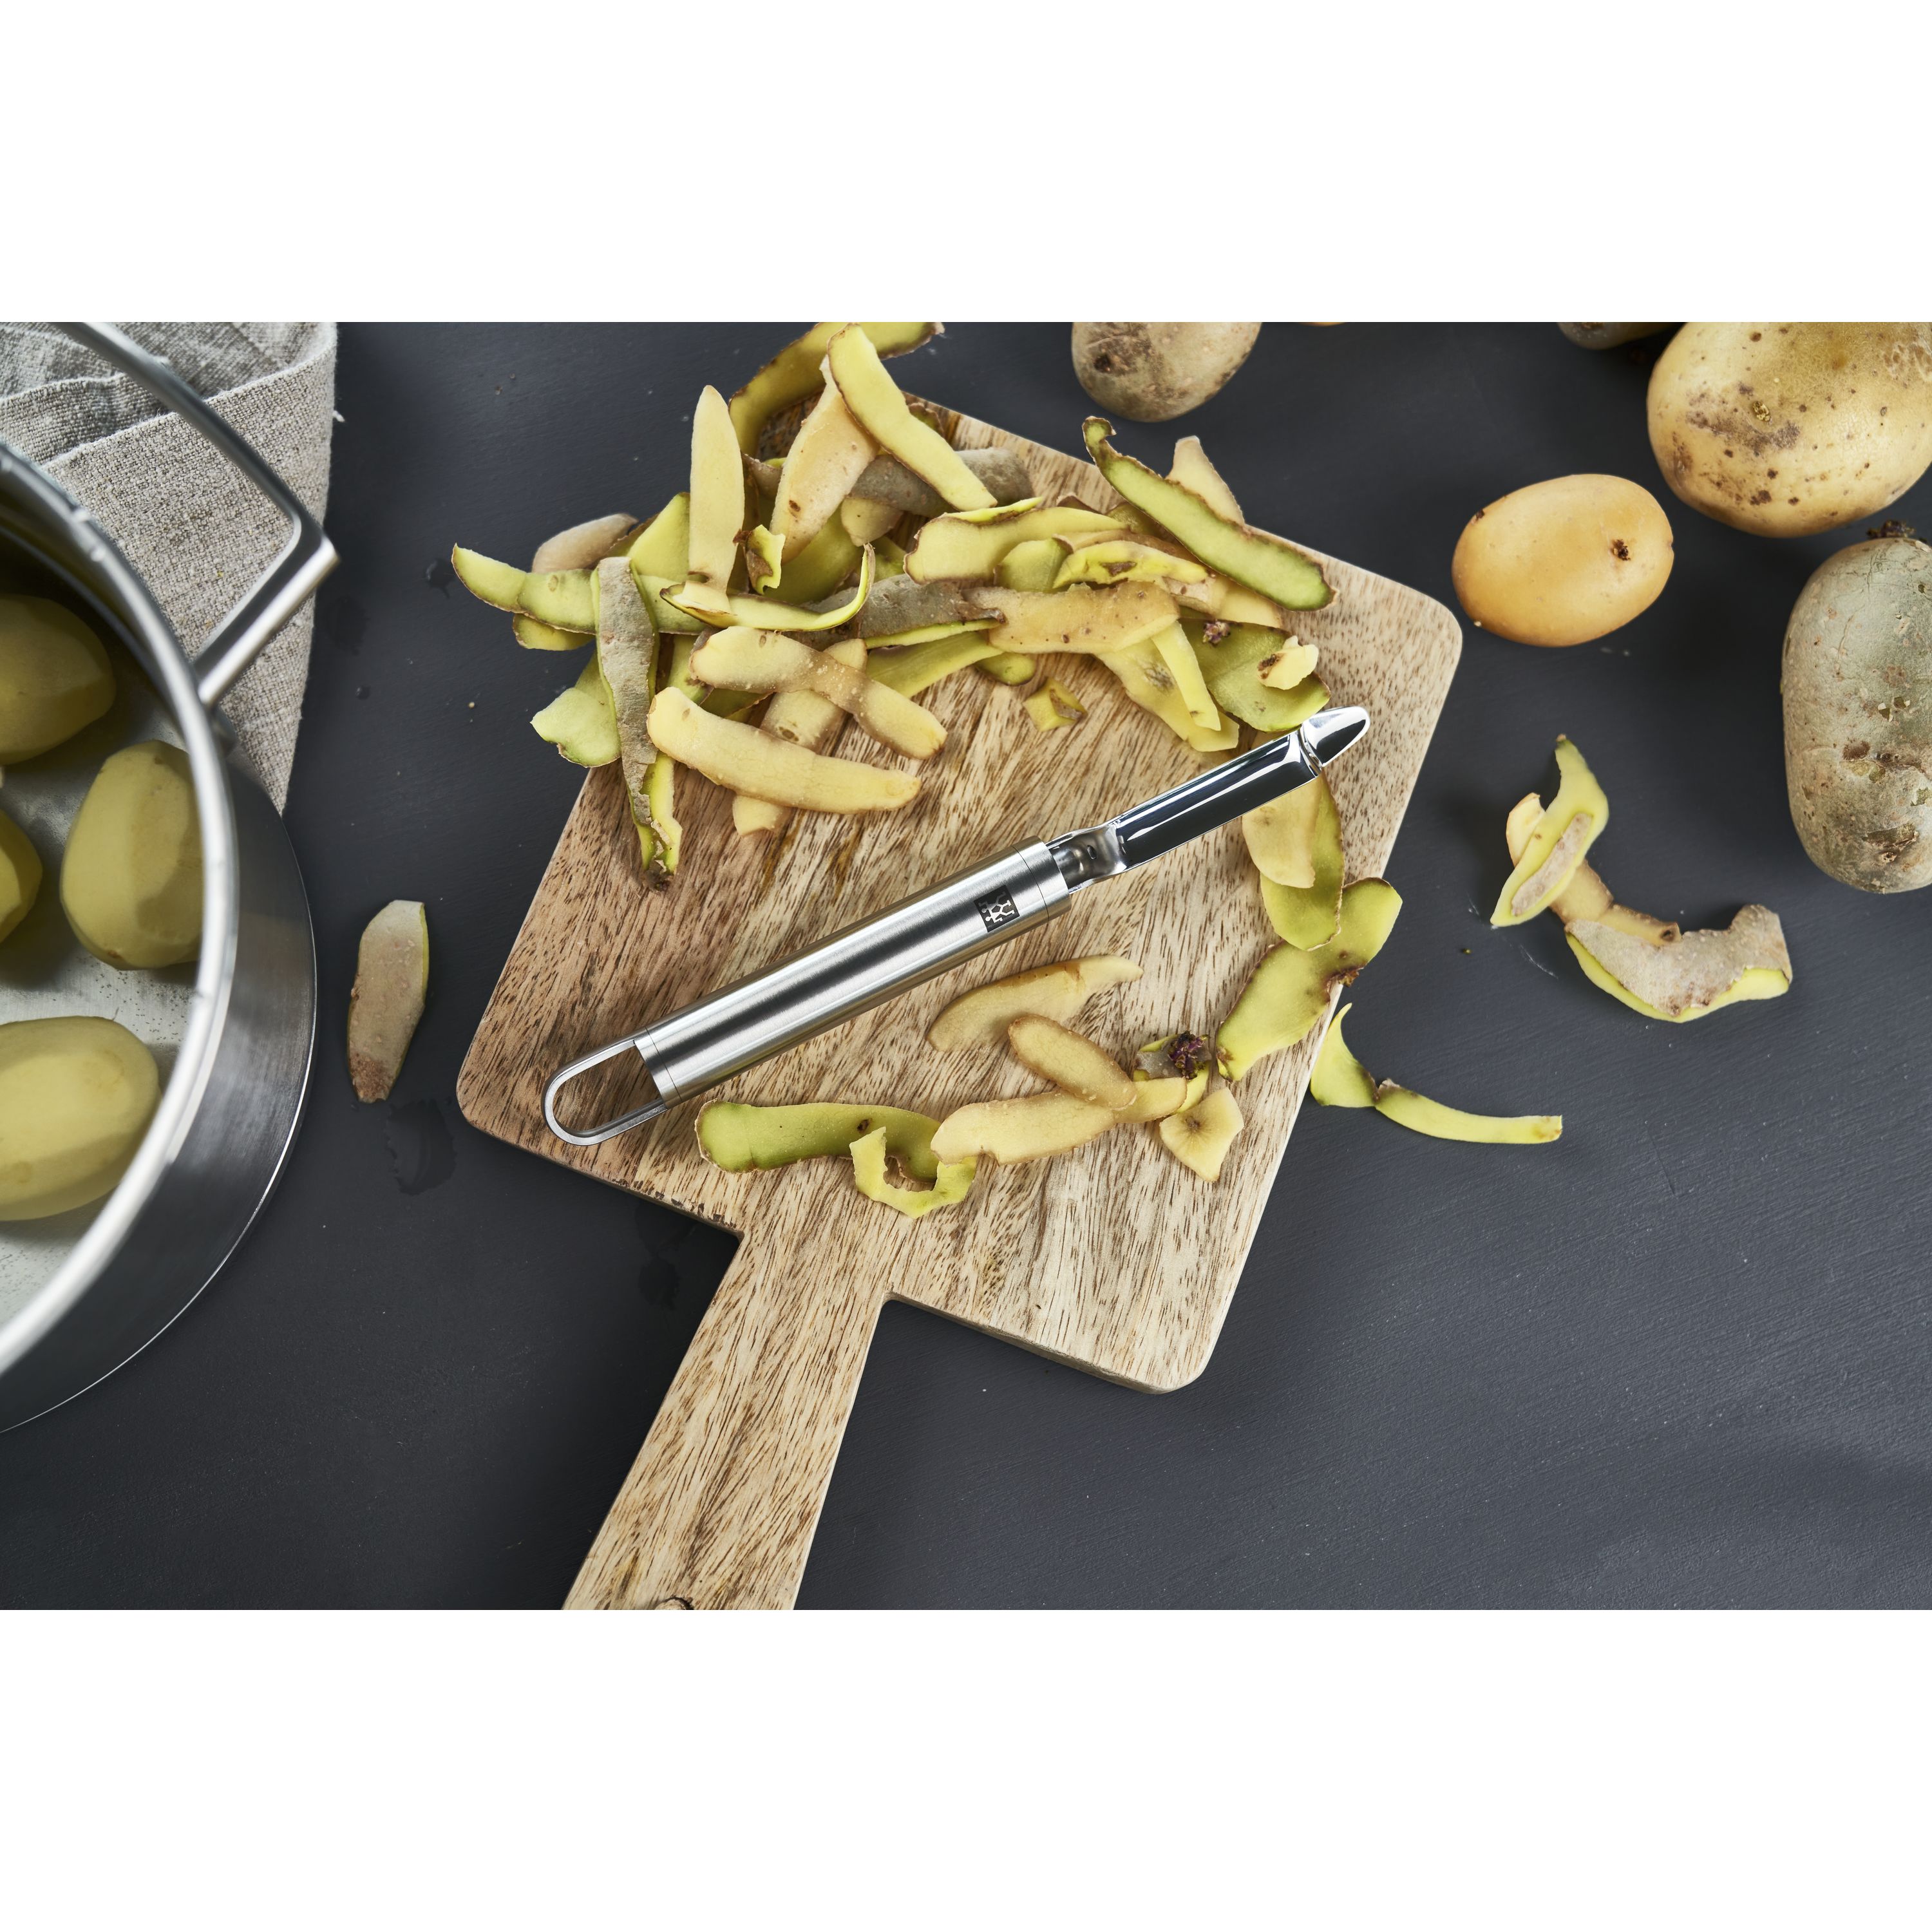 Gourmet Kitchen Vegetable Peeler Potatoes Vegetables More Stainless Steel